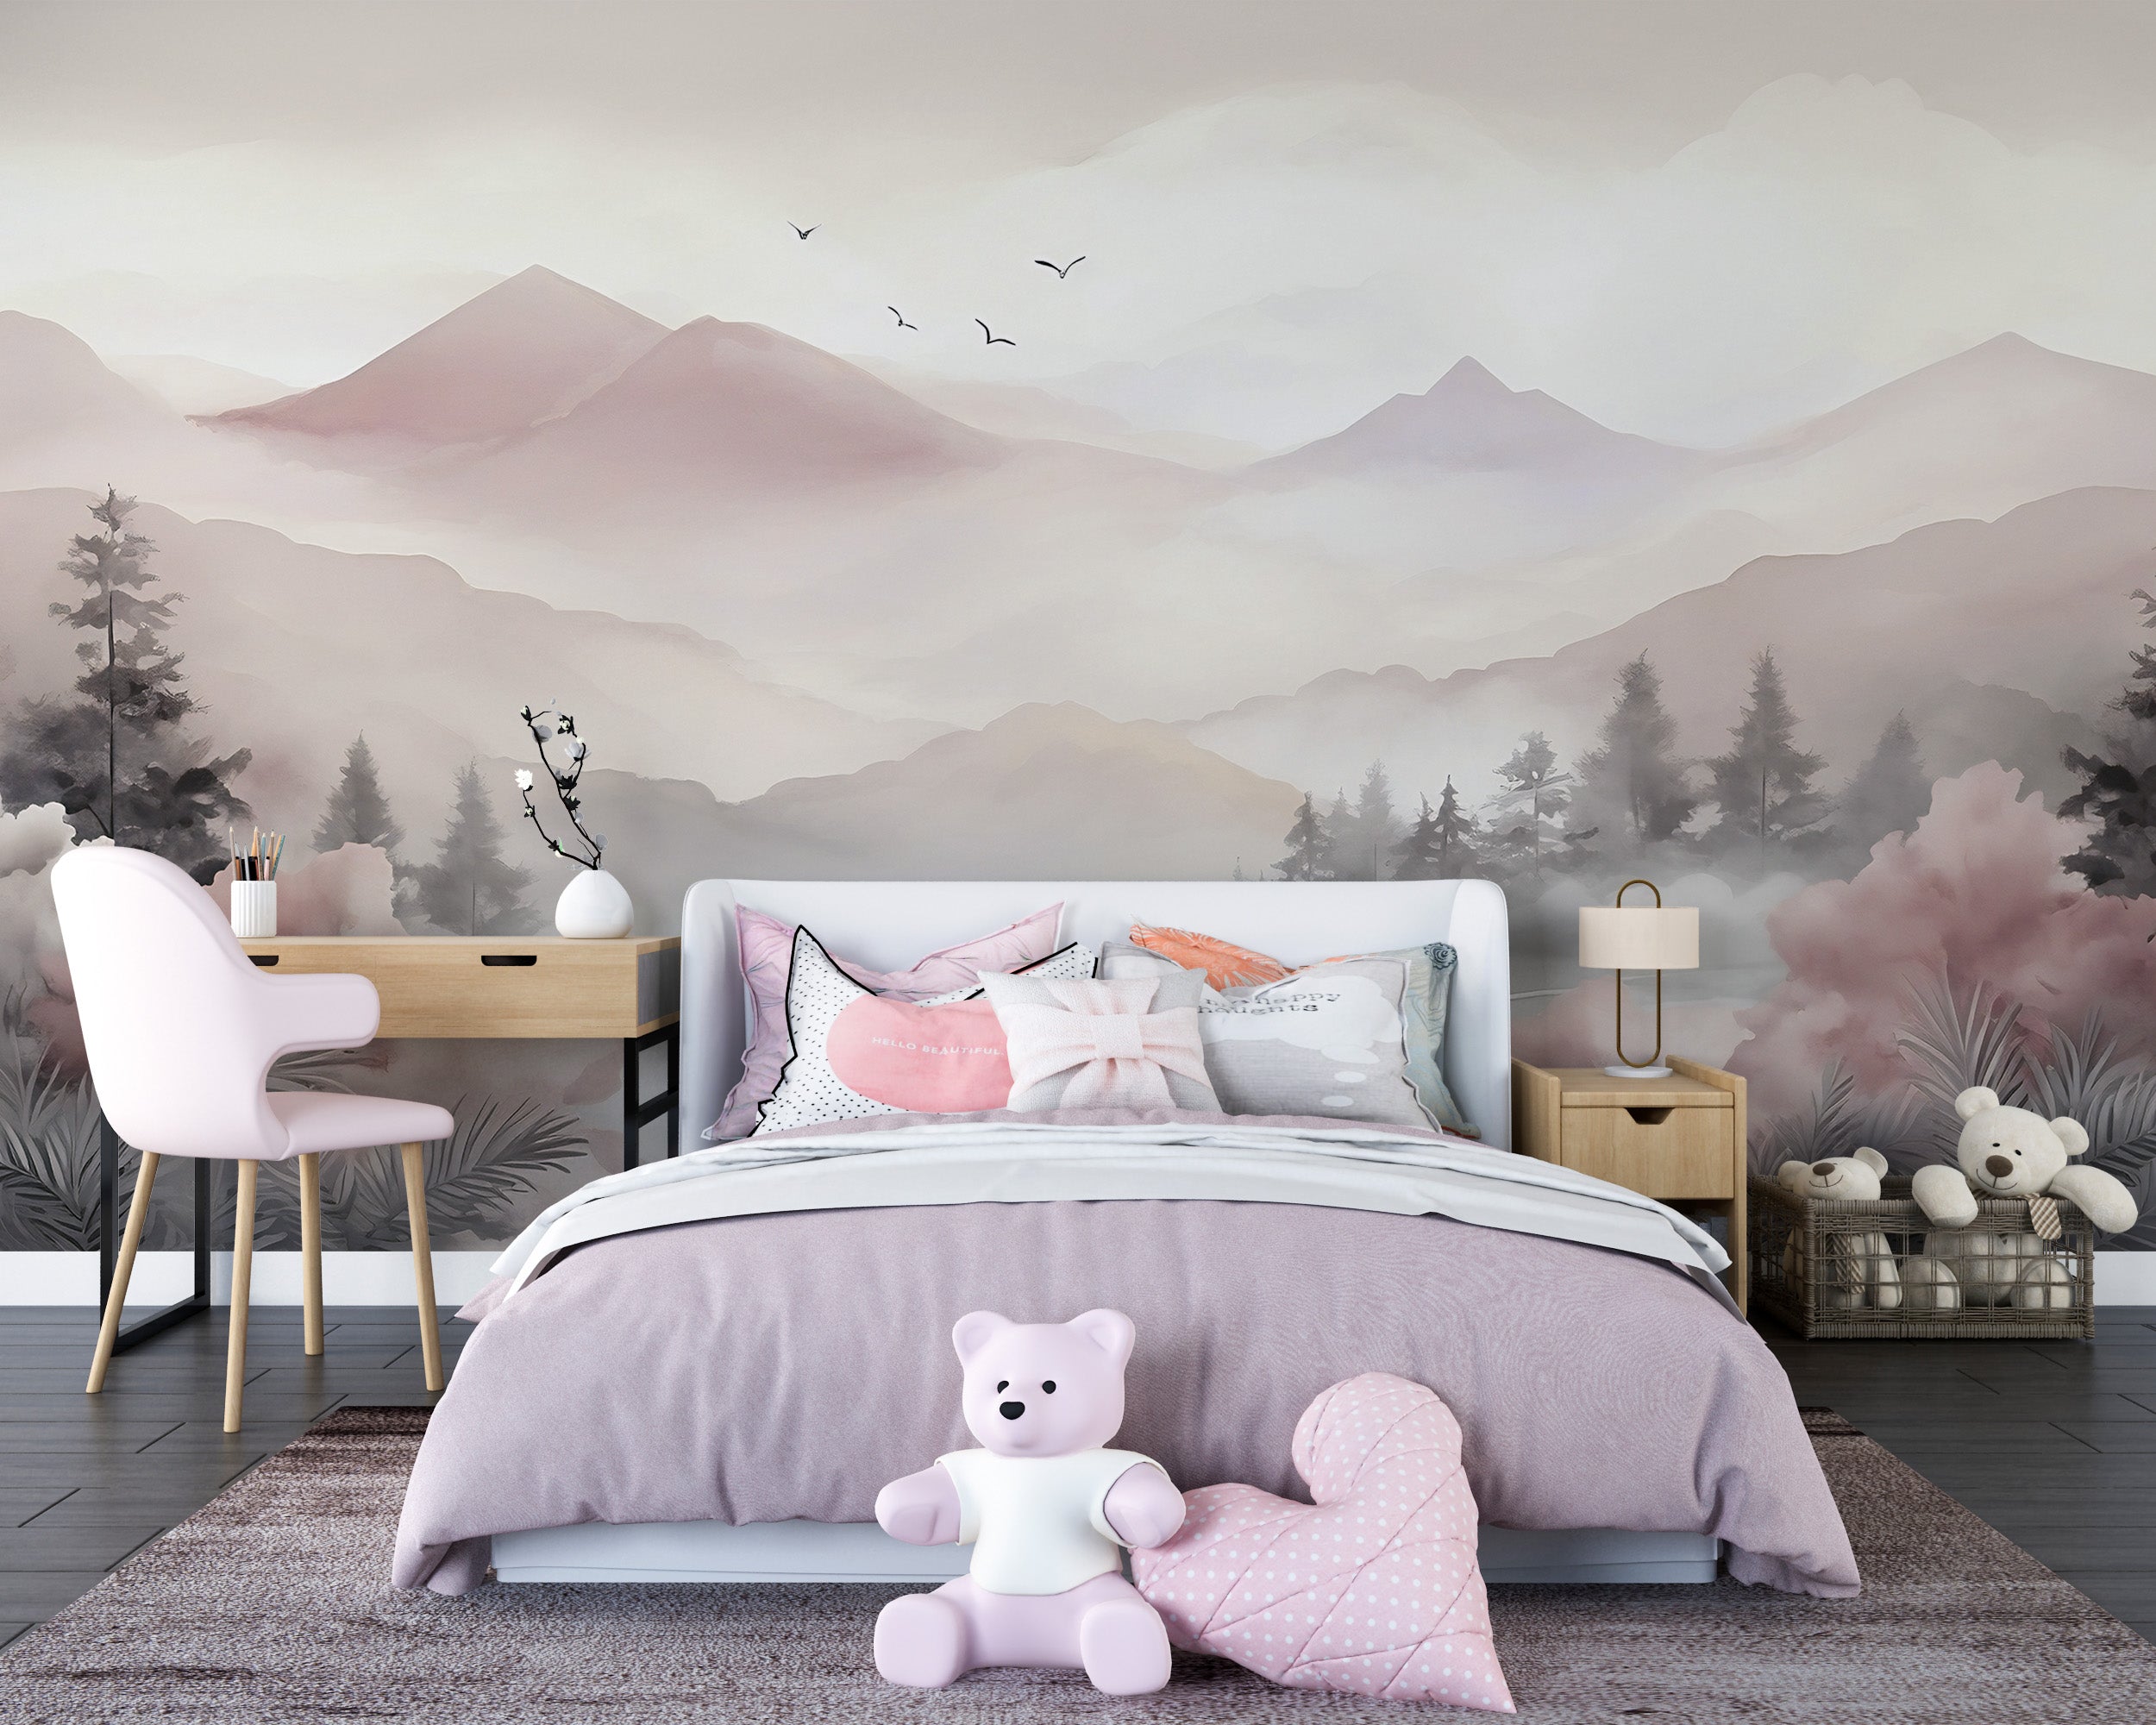 Watercolor Landscape Theme for Kids' Bedroom